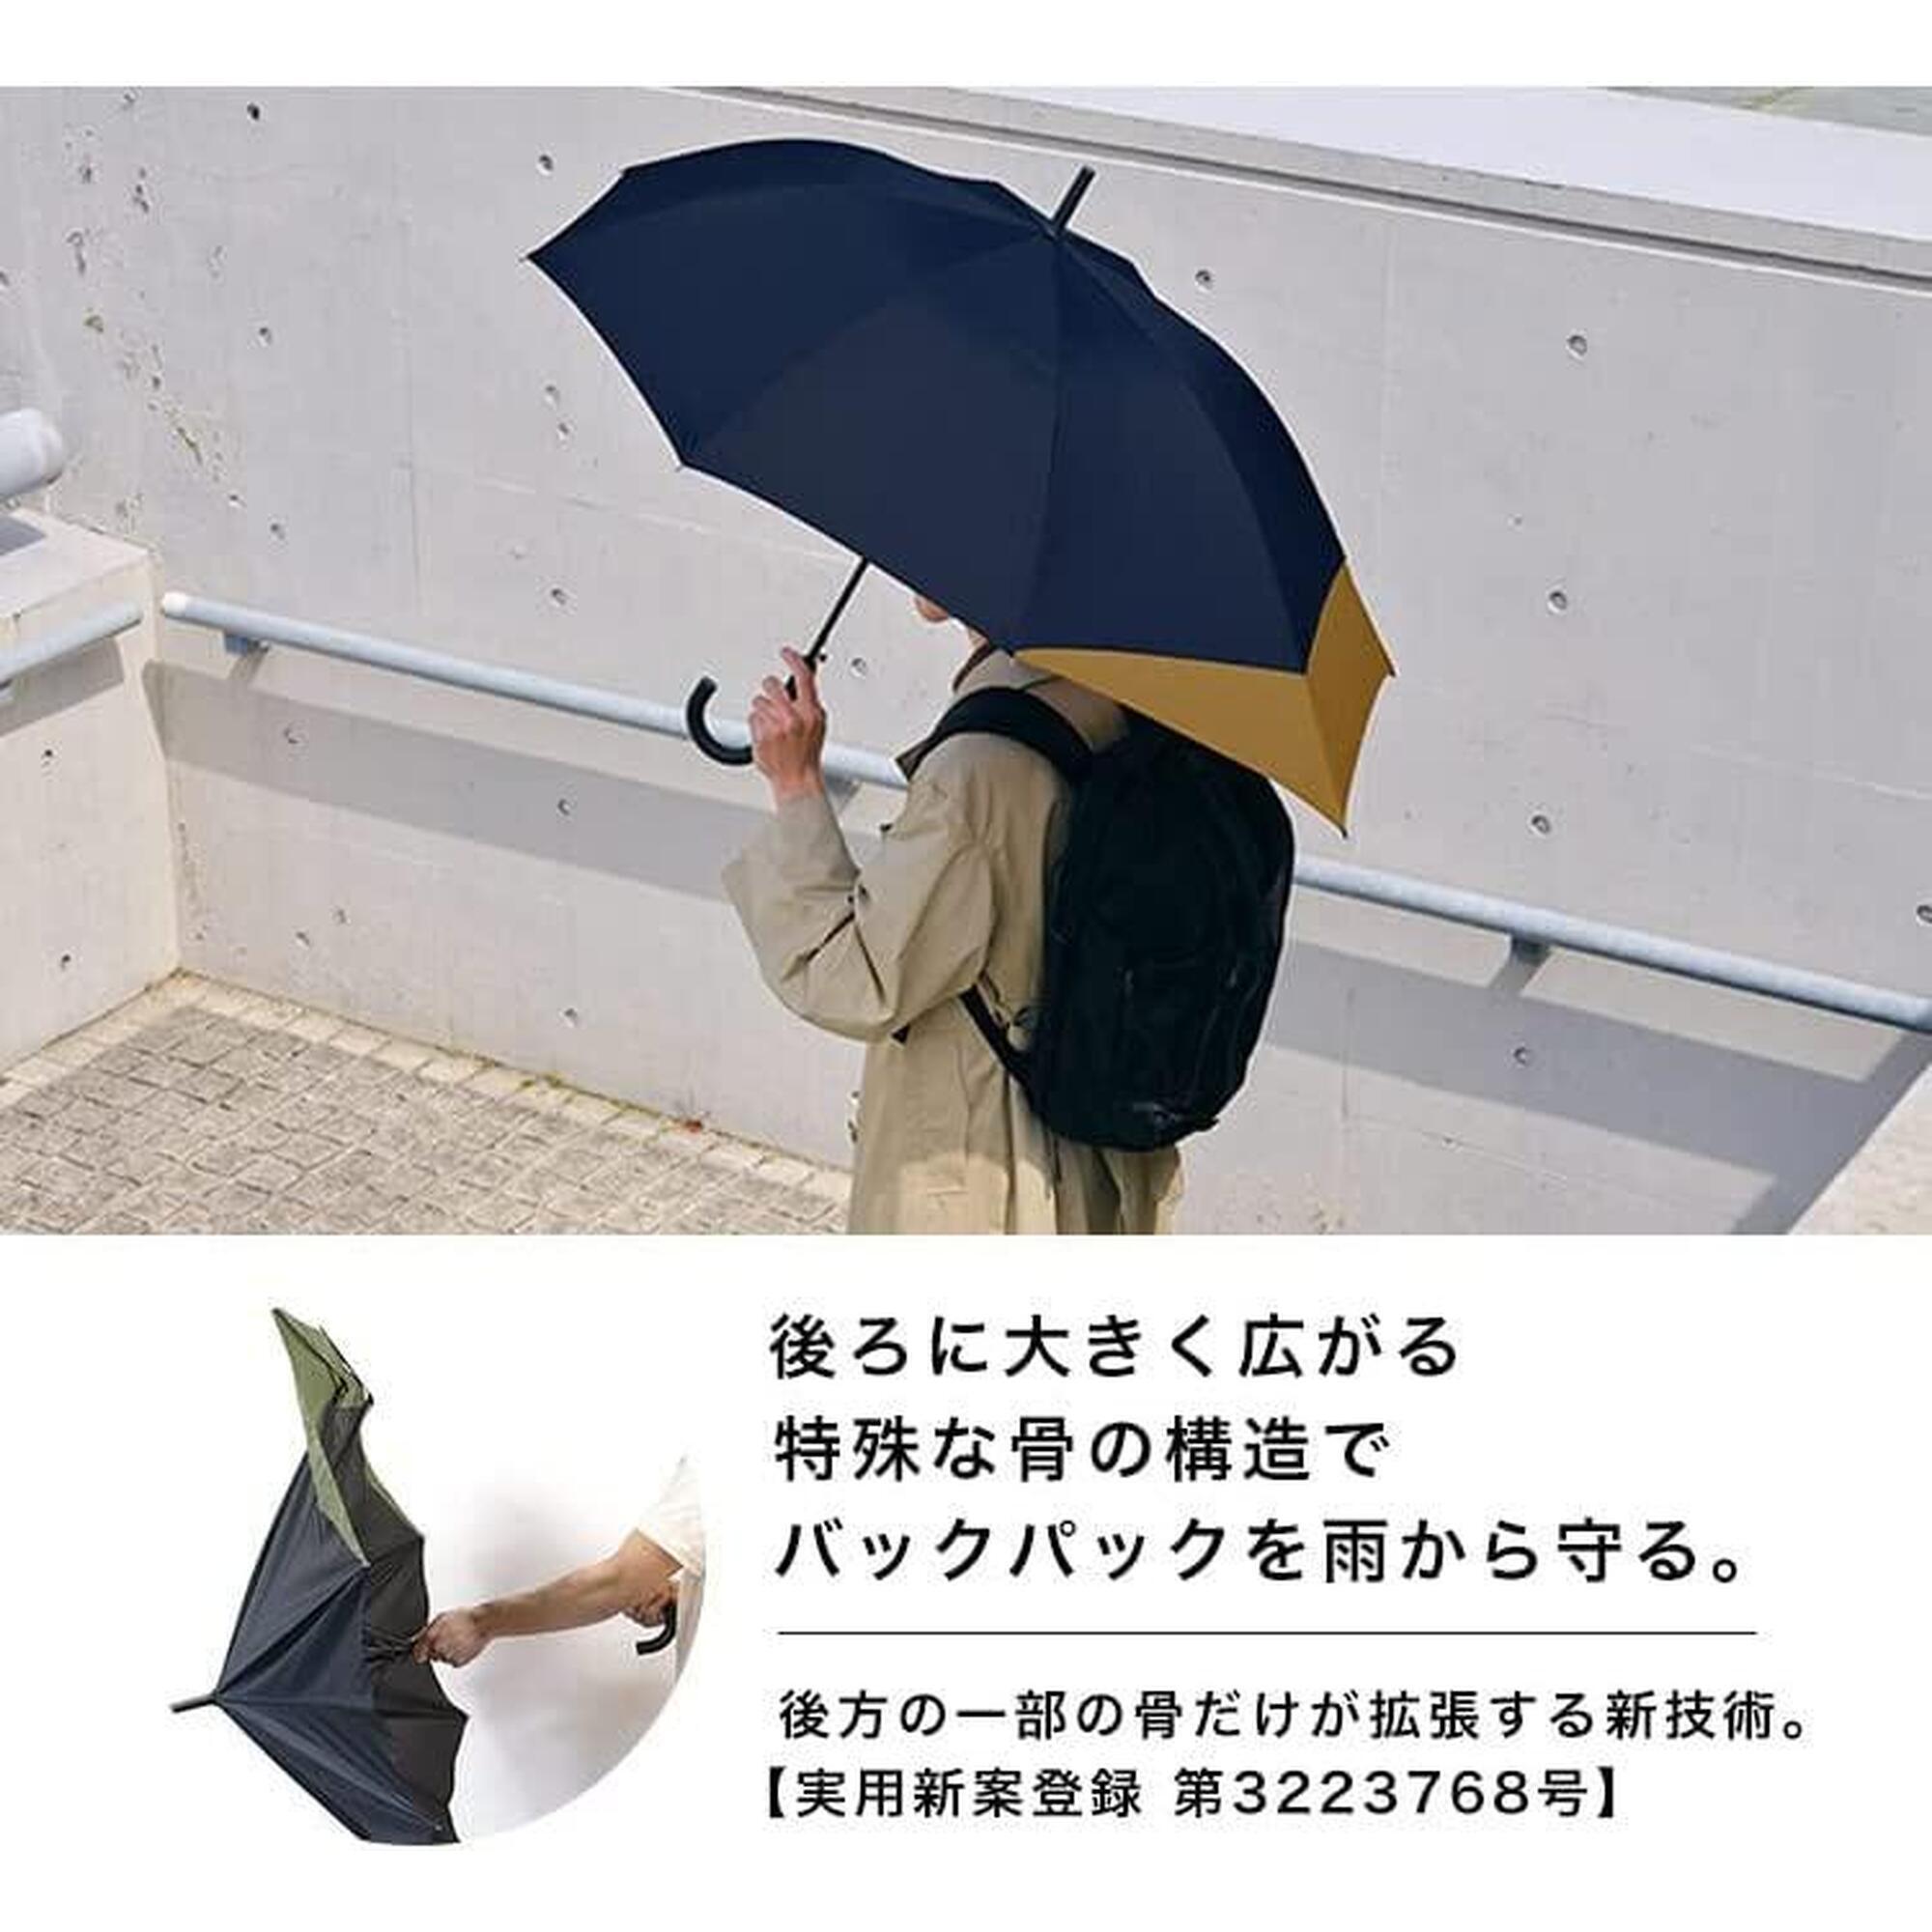 UX 戶外情侶長雨傘 - 卡其色及黑色